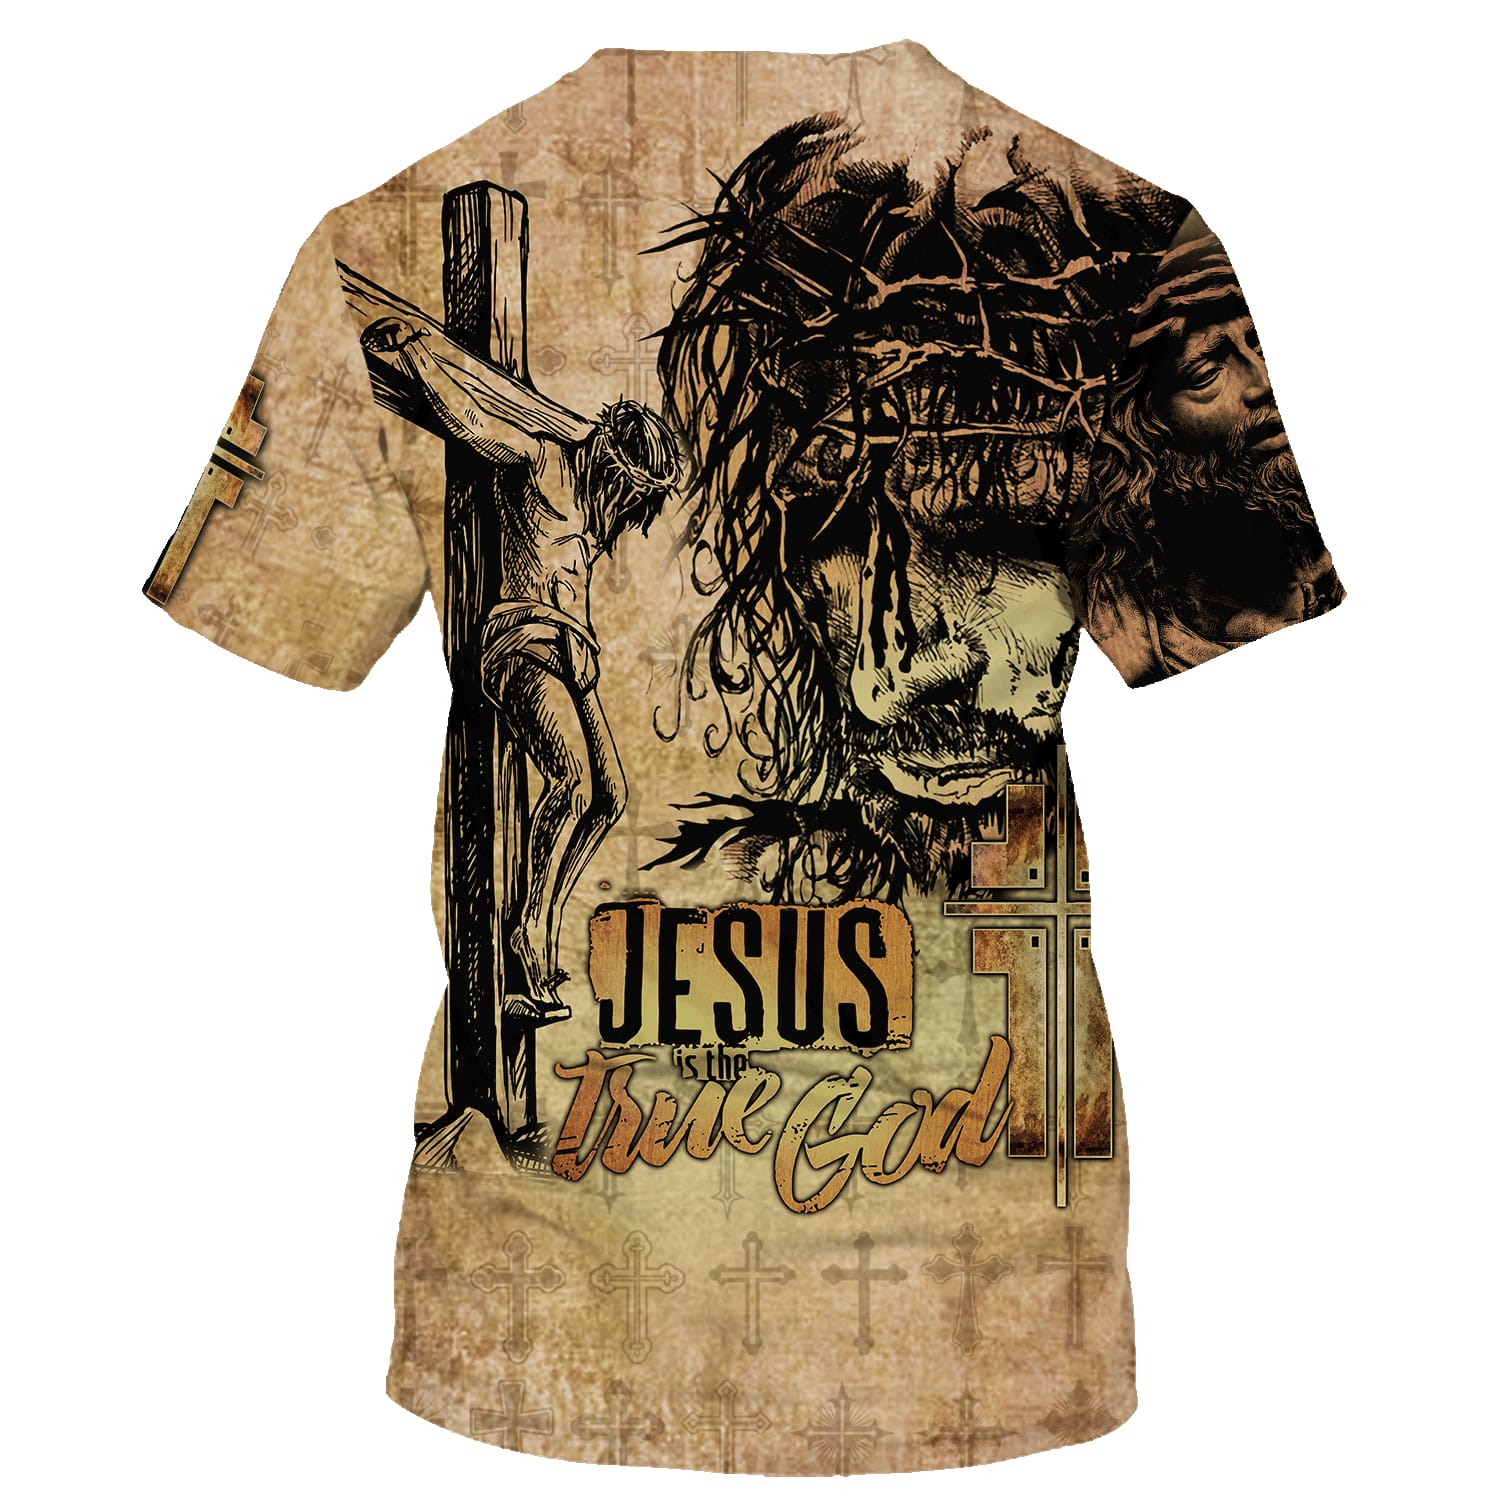 Jesus Is True God Jesus Christ Crucified 3d T-Shirts - Christian Shirts For Men&Women